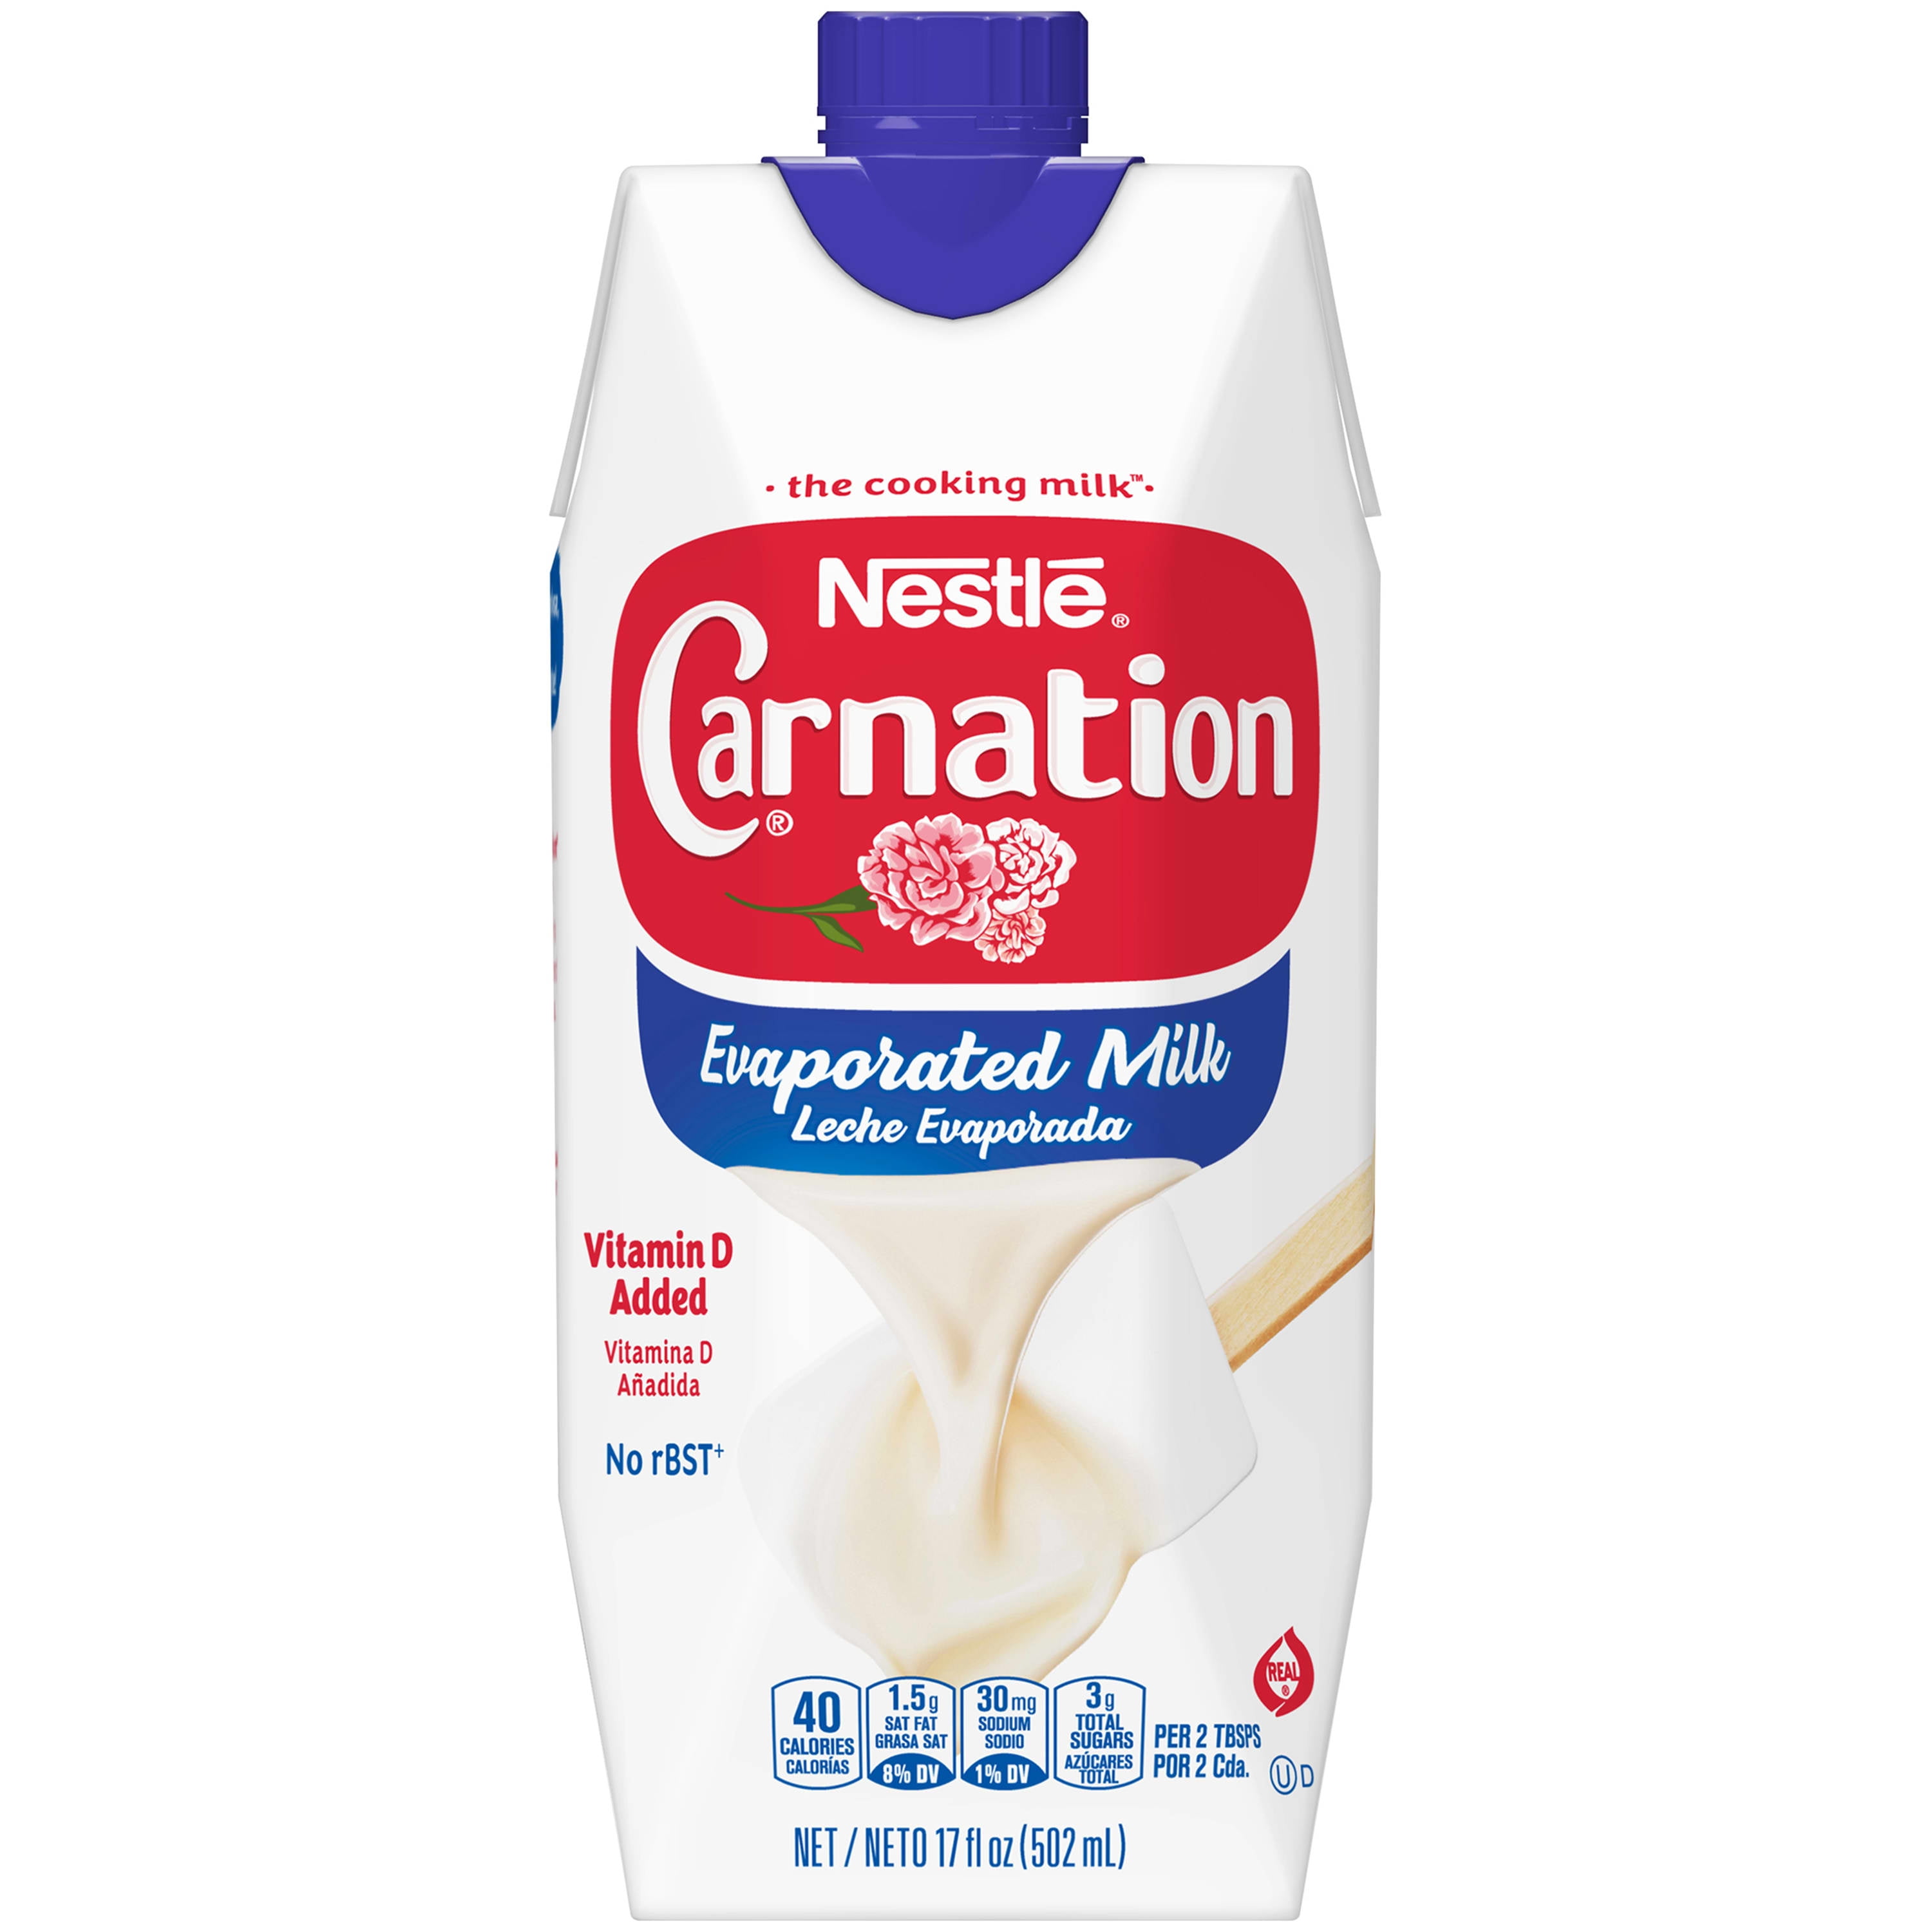 Nestle Carnation Evaporated Milk, Vitamin D Added, 17 fl oz